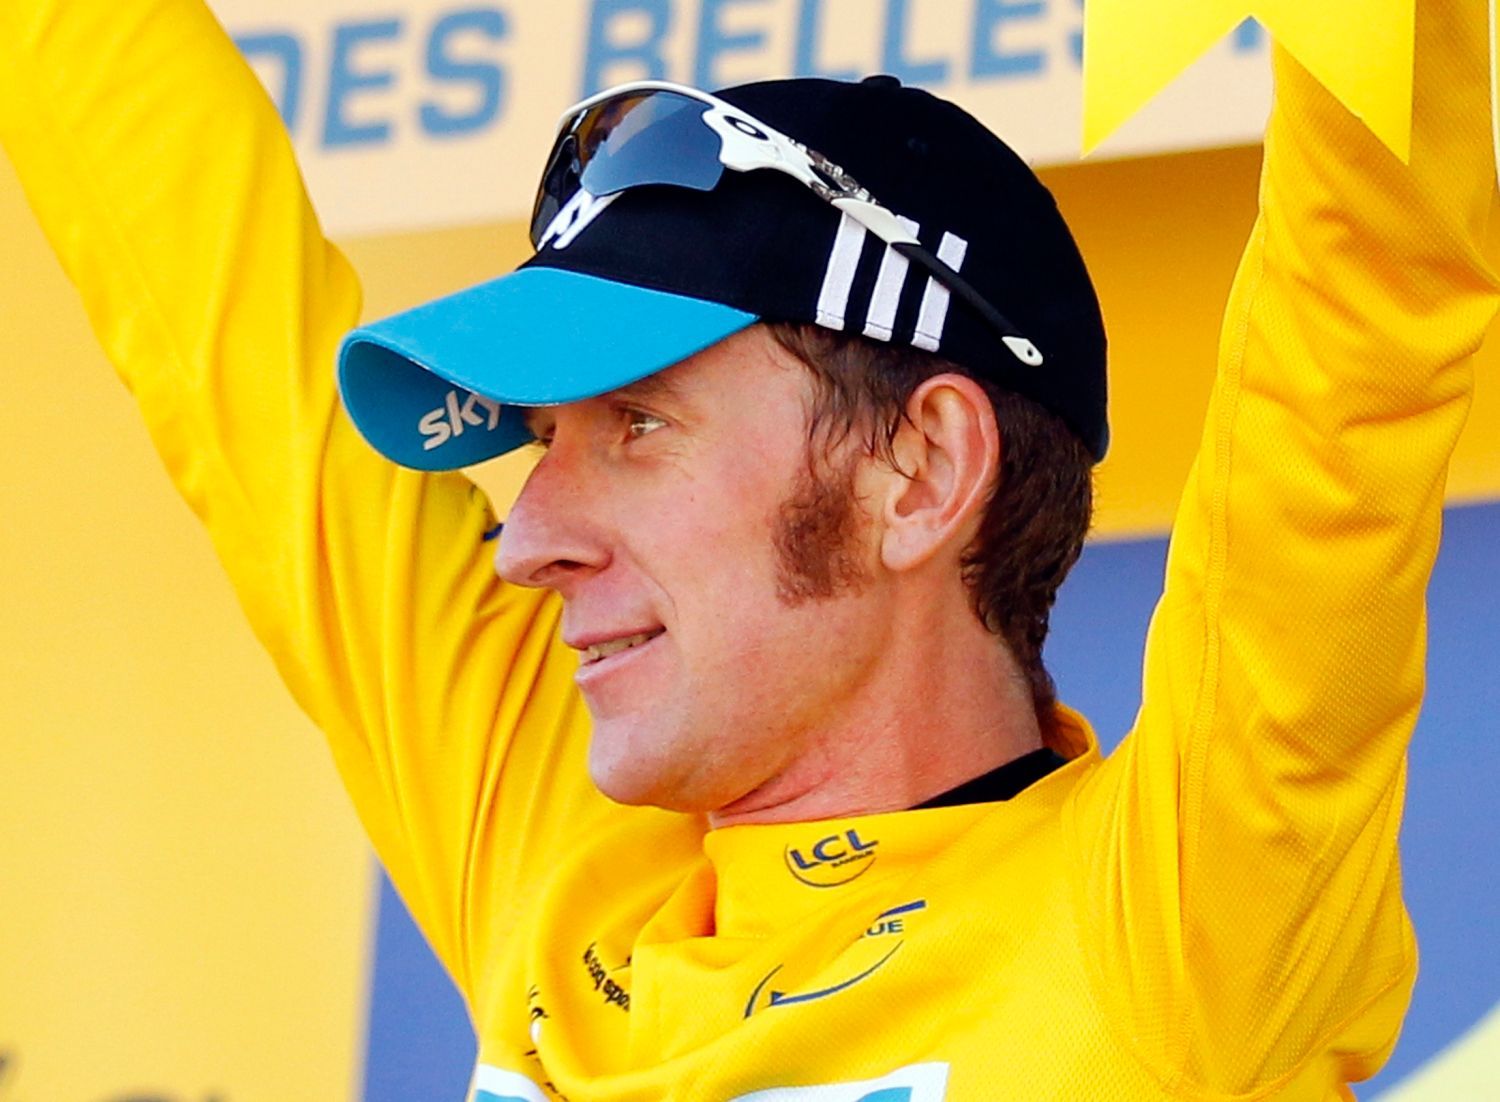 Britský cyklista Bradley Wiggins během sedmé etapy Tour de France 2012.